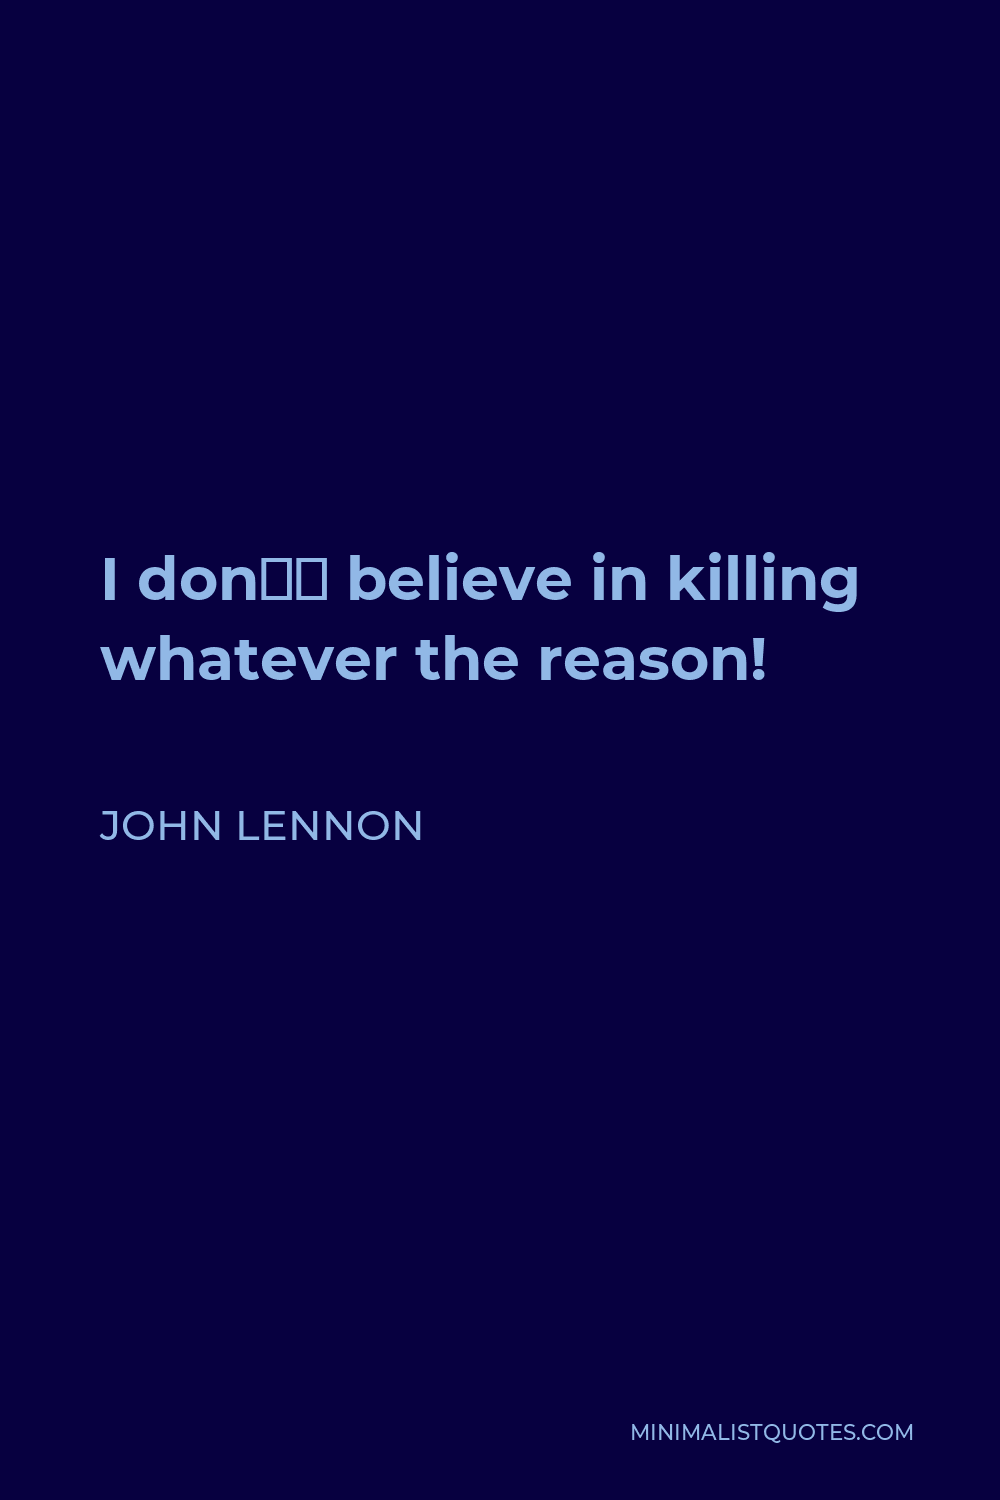 John Lennon Quote - I don’t believe in killing whatever the reason!